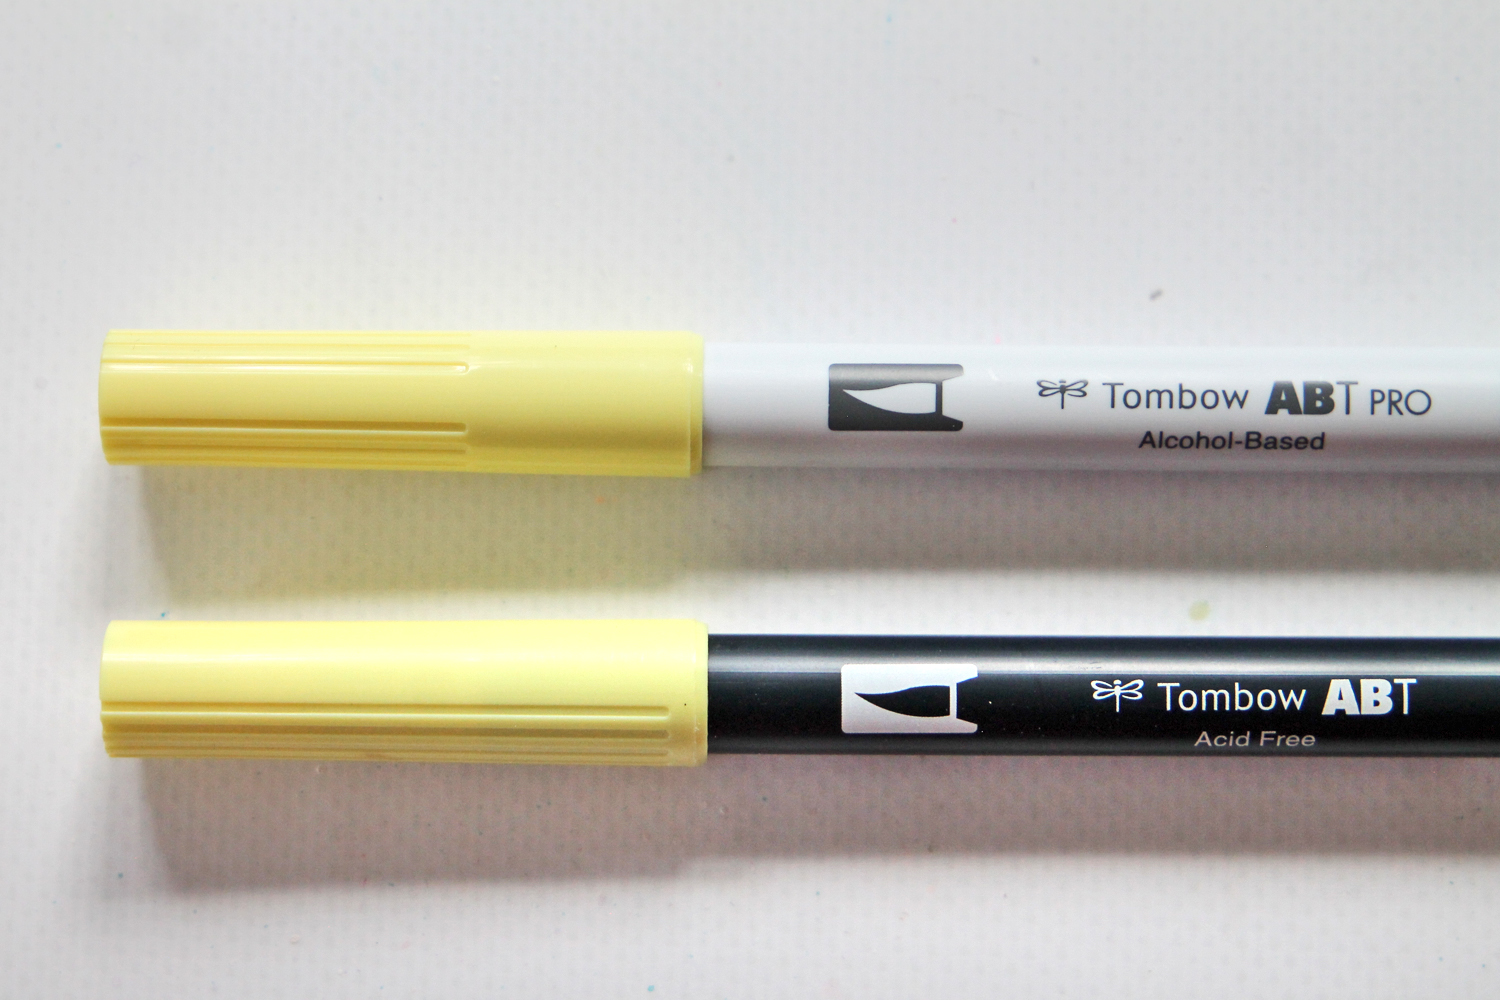 Tombow : Abt Pro : Alcohol Based Marker Pen : Hunter Green